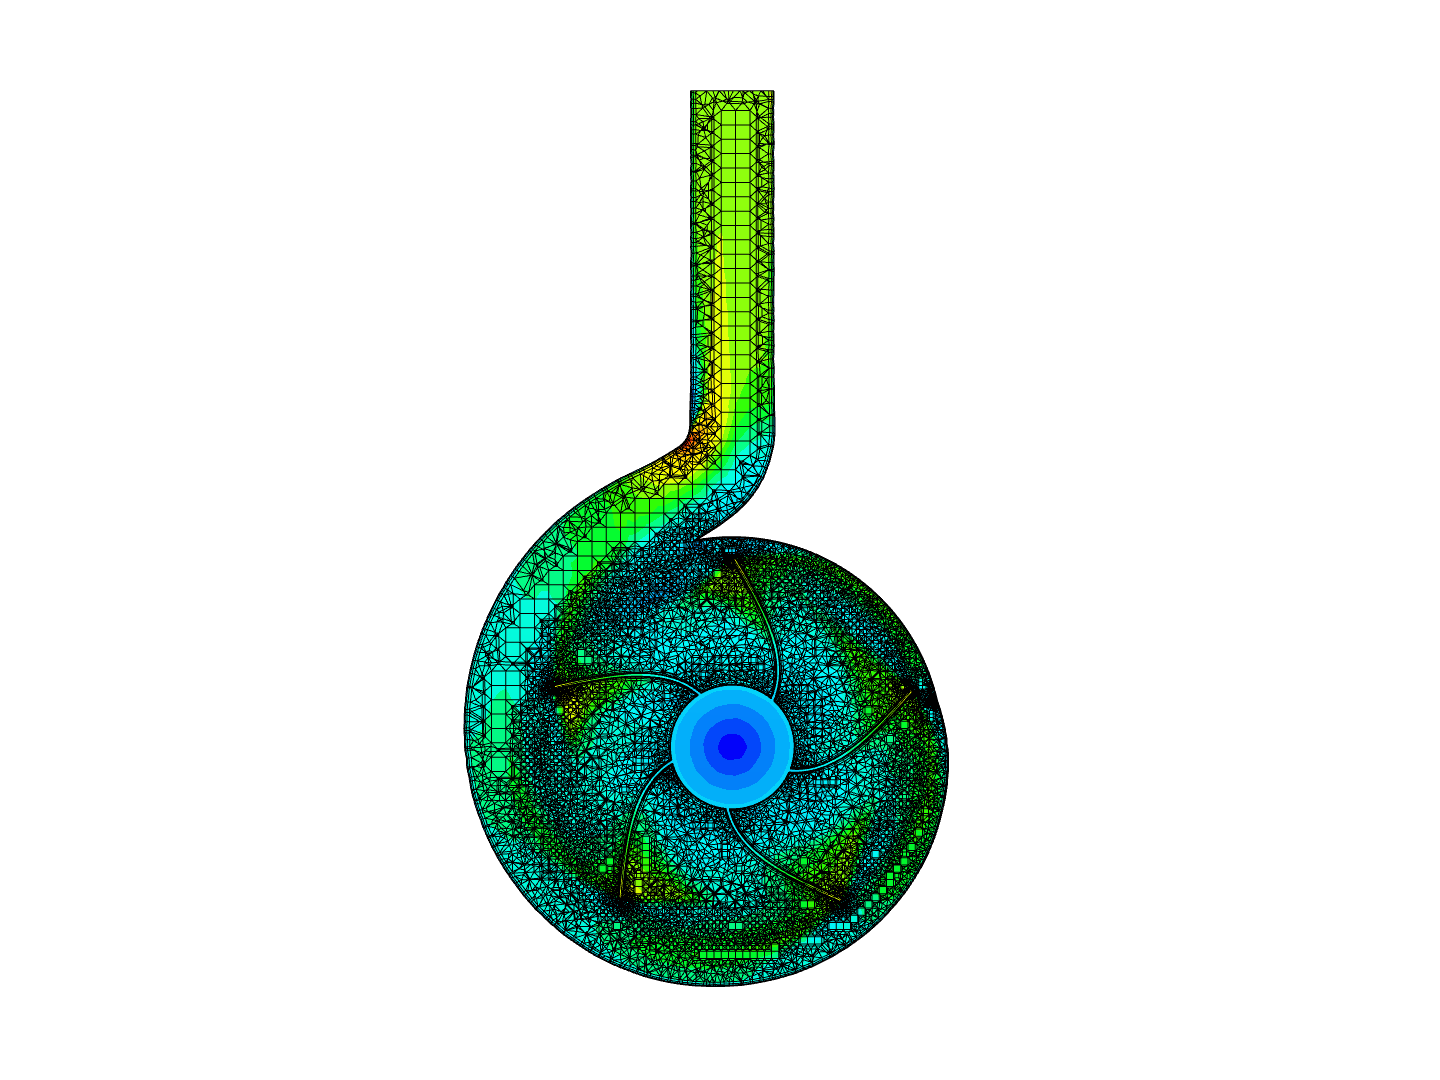 centrifugal pump simulation corsera - Copy - Copy image